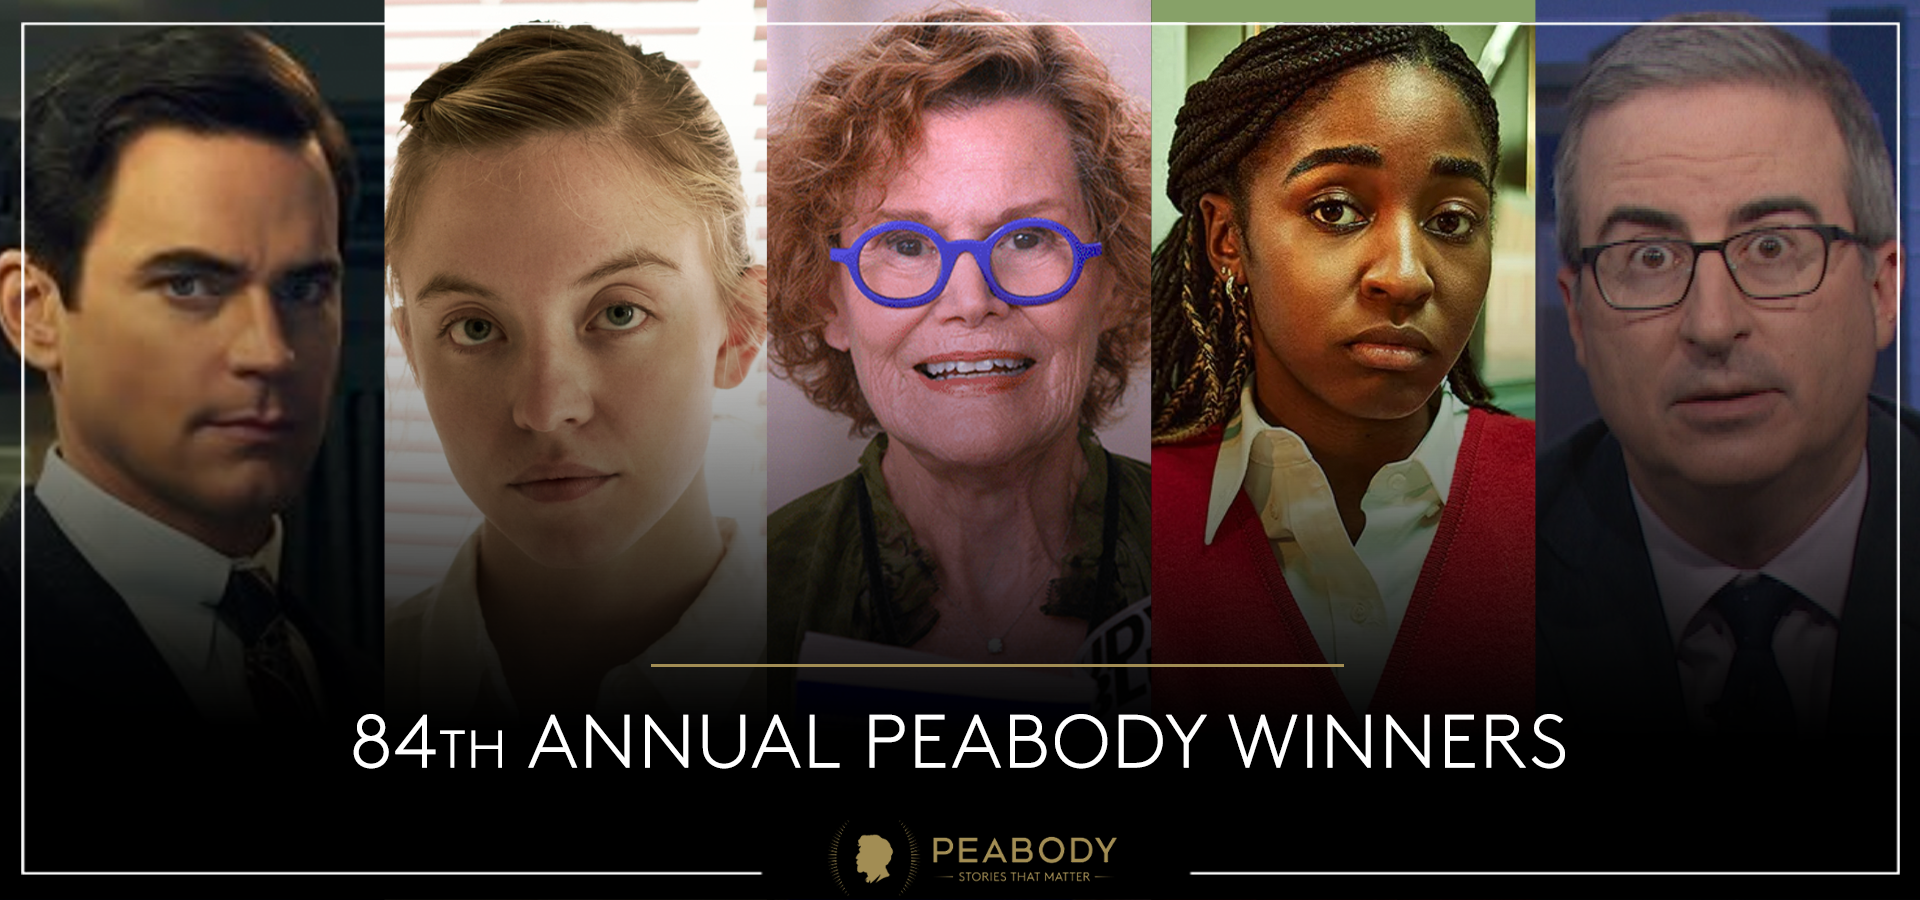 84th Annual Peabody Award winners announced - Grady